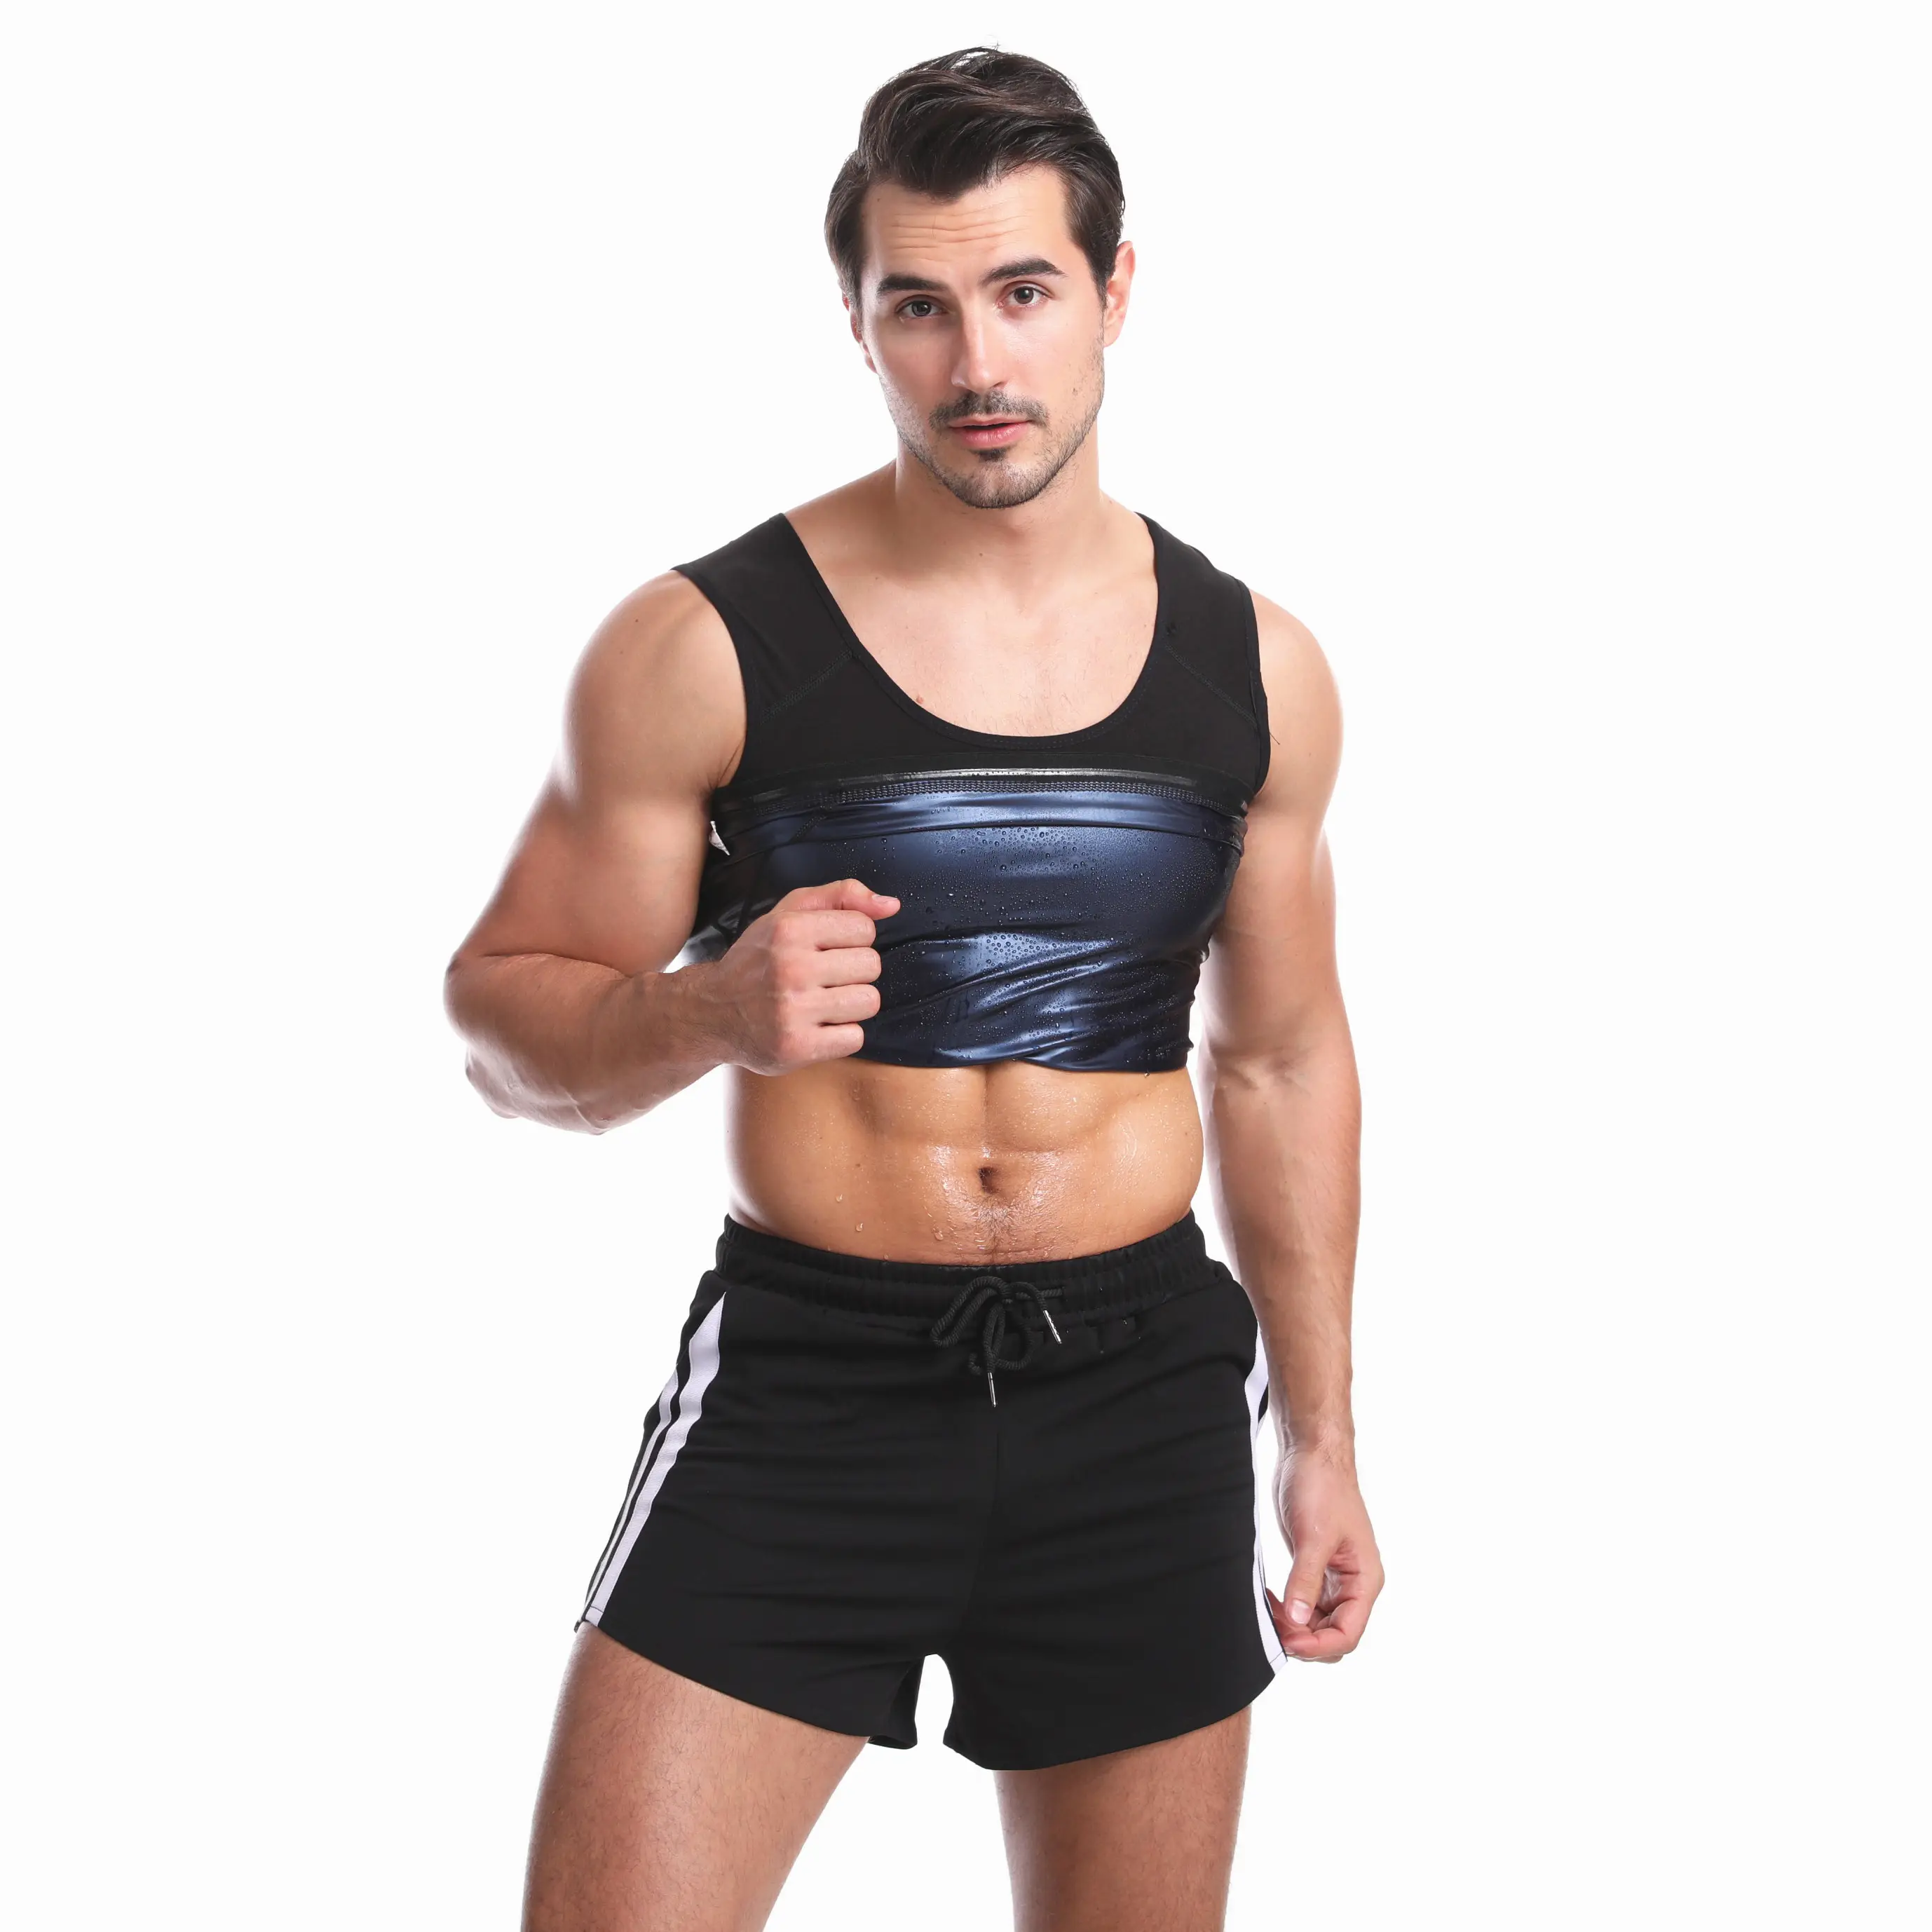 Men's Women's Workout Weight Loss Neoprene Sweat Enhancer Slimming Waist Trainer Sauna Vest For Men and Women